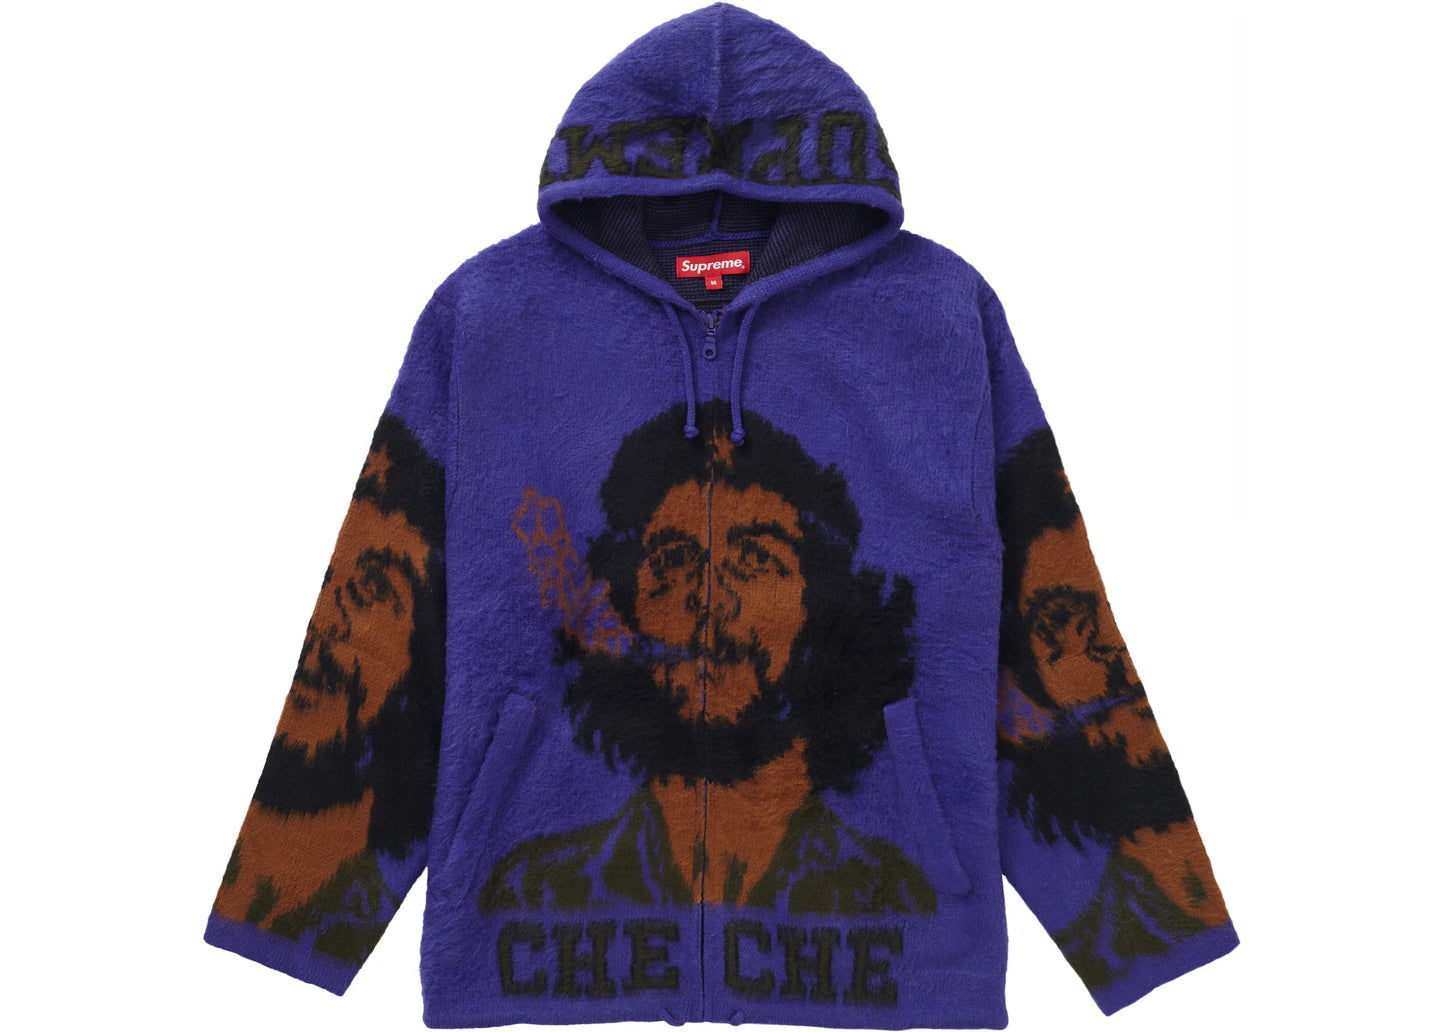 Supreme Che Hooded Zip Up Sweater Purple